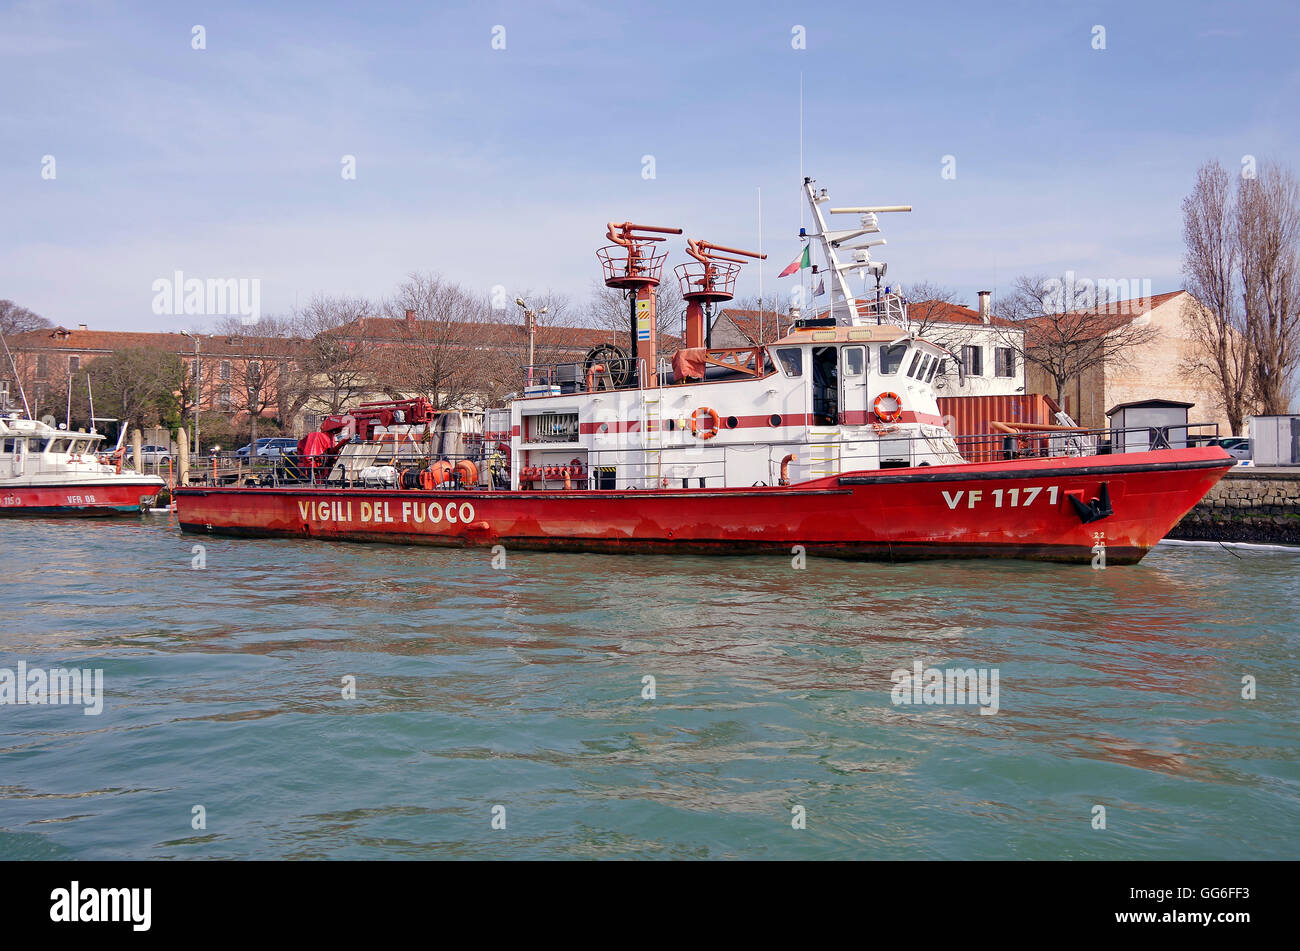 Venice Italy Fire boat moored near Commercial port Stock Photo